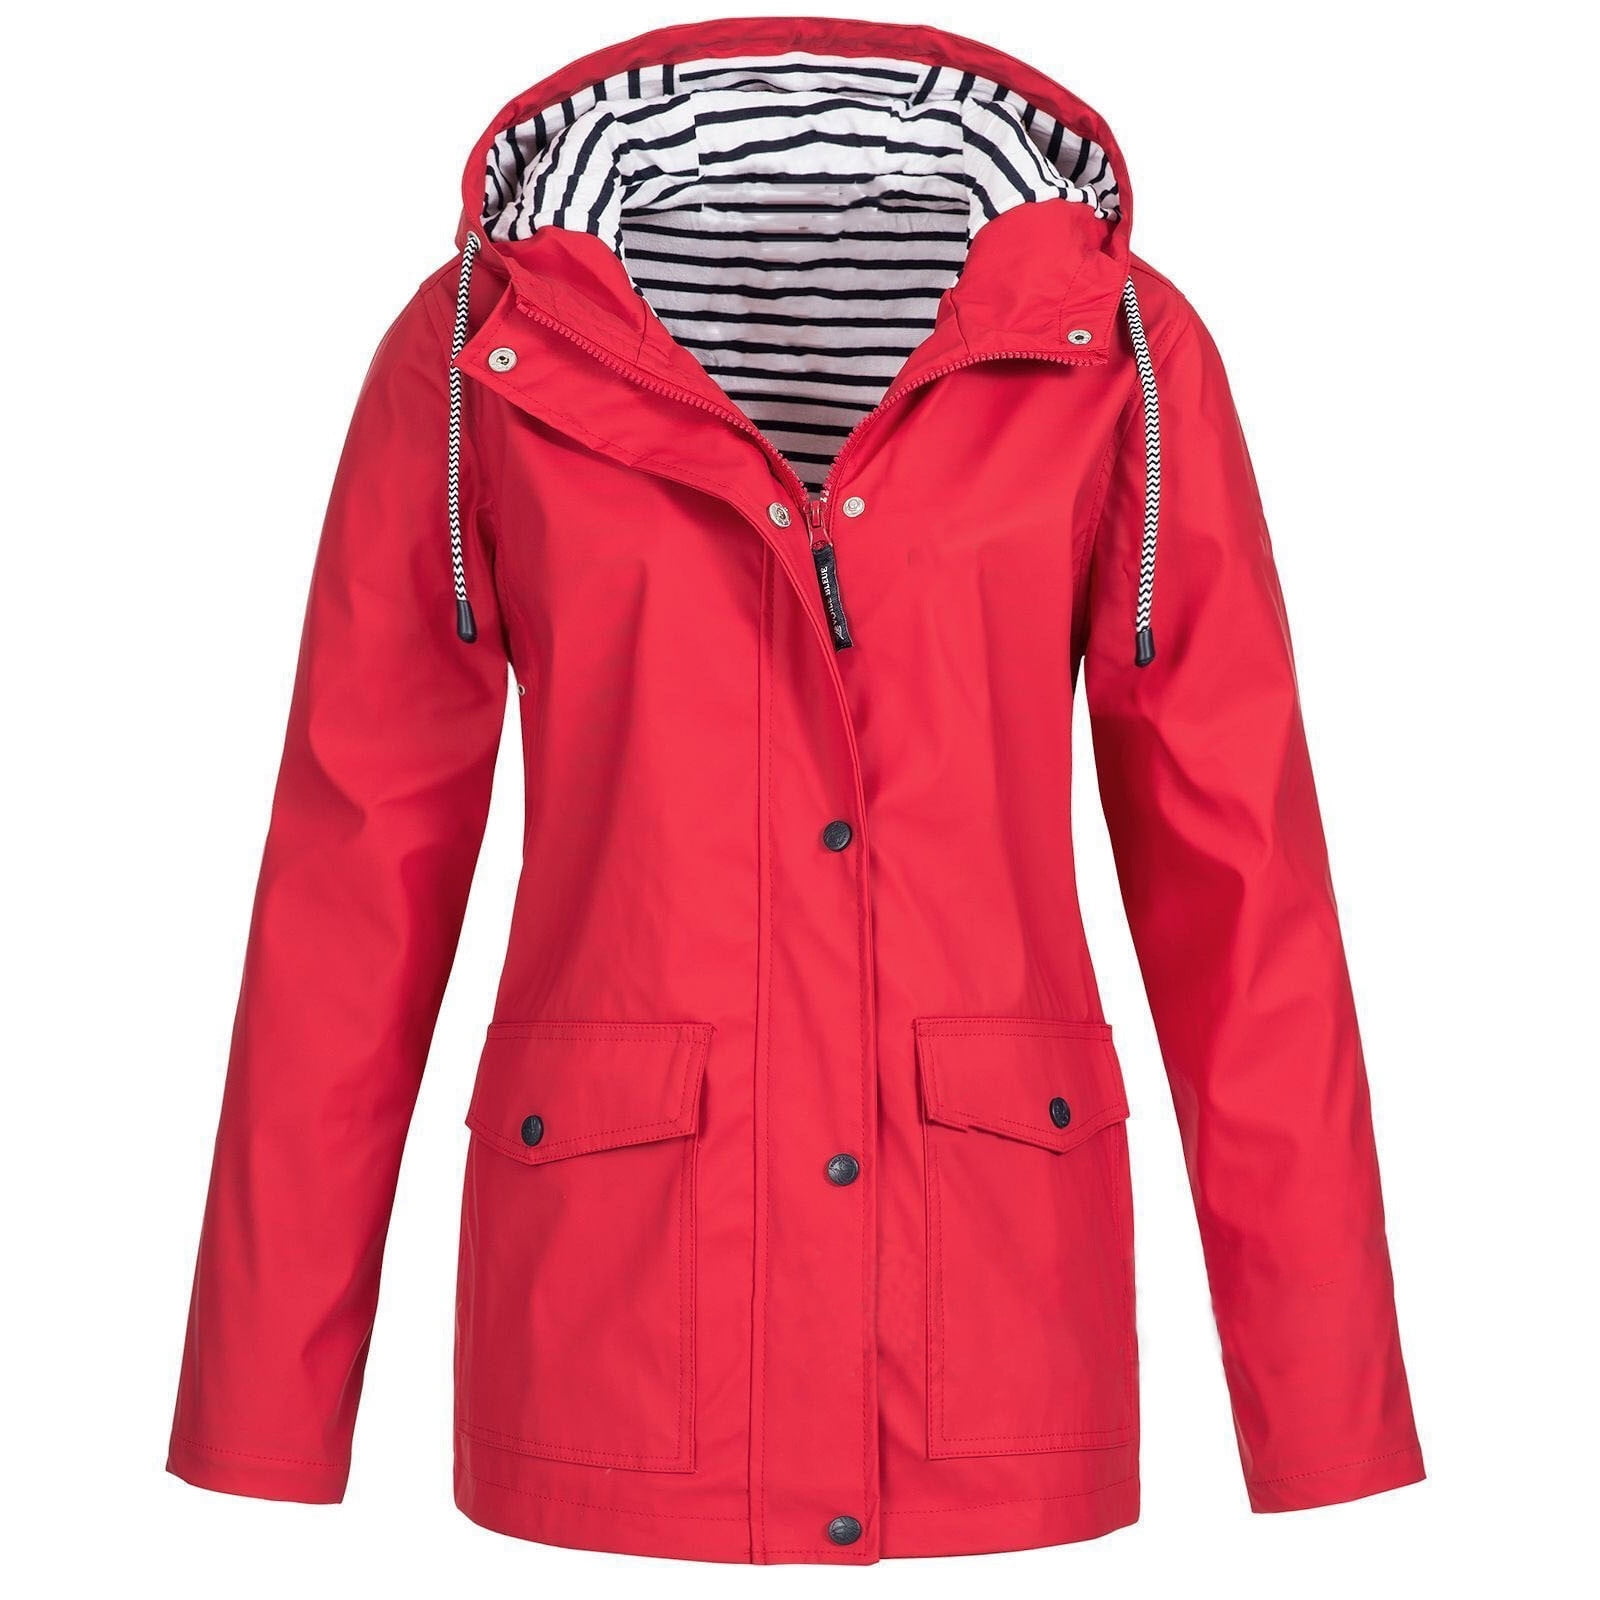 RYDCOT Women Solid Rain Jacket Outdoor Plus Size Waterproof Hooded ...